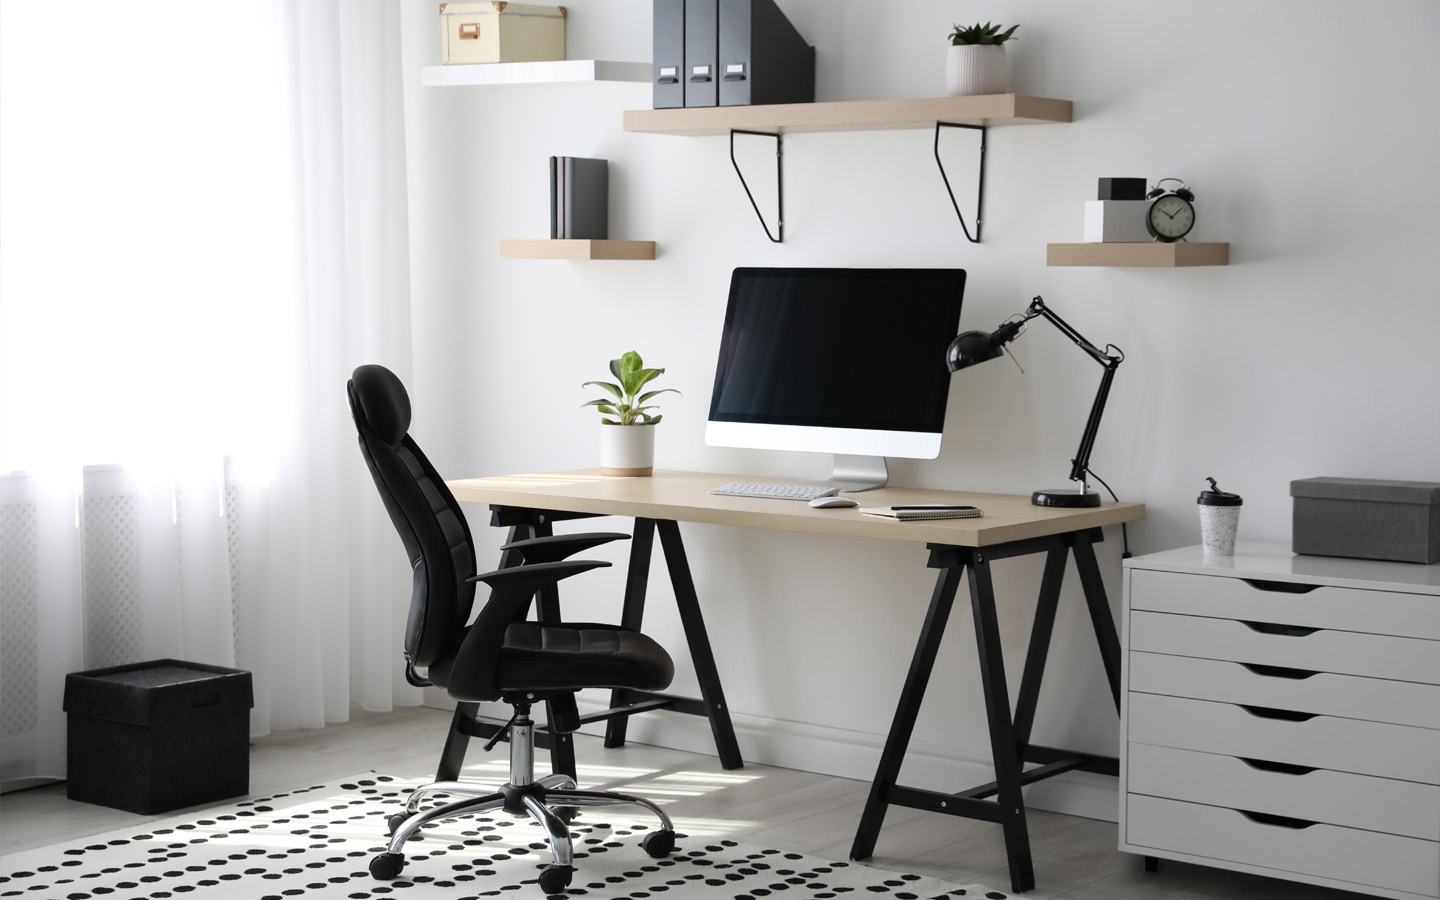 maid room transformation ideas: home office setup 